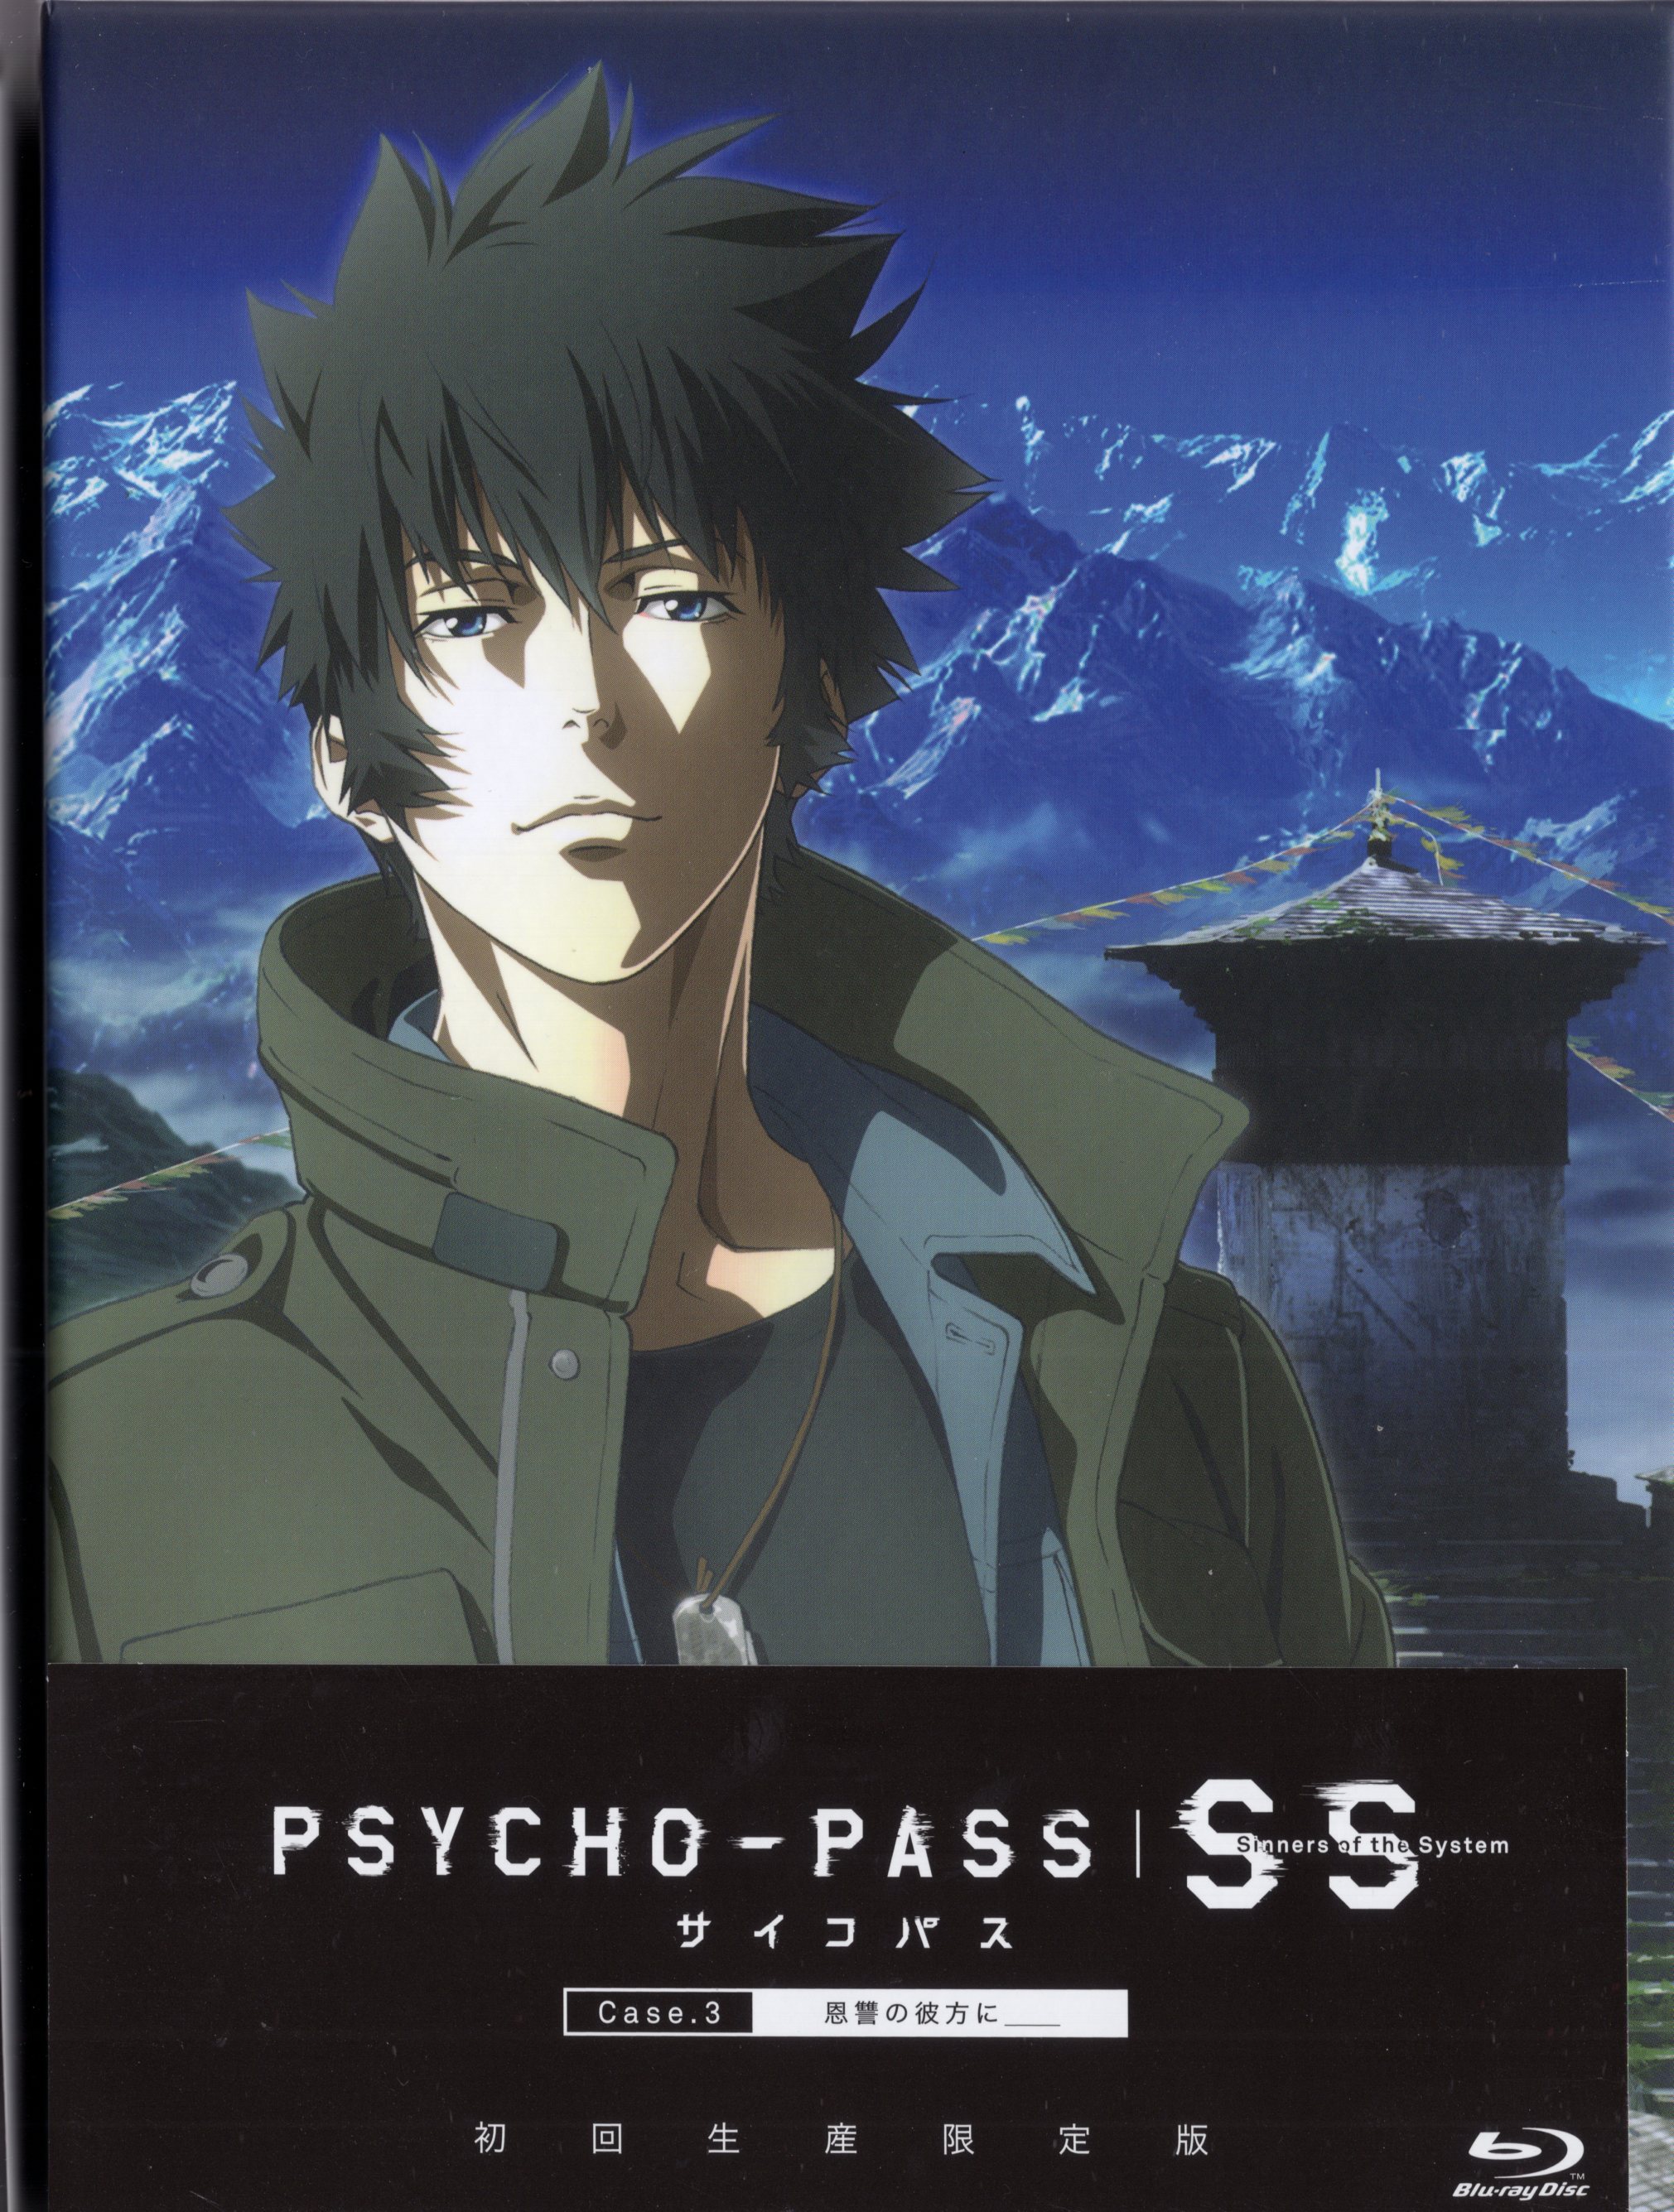 PSYCHO-PASS サイコパス 2 BD全巻+収納BOX - DVD/ブルーレイ